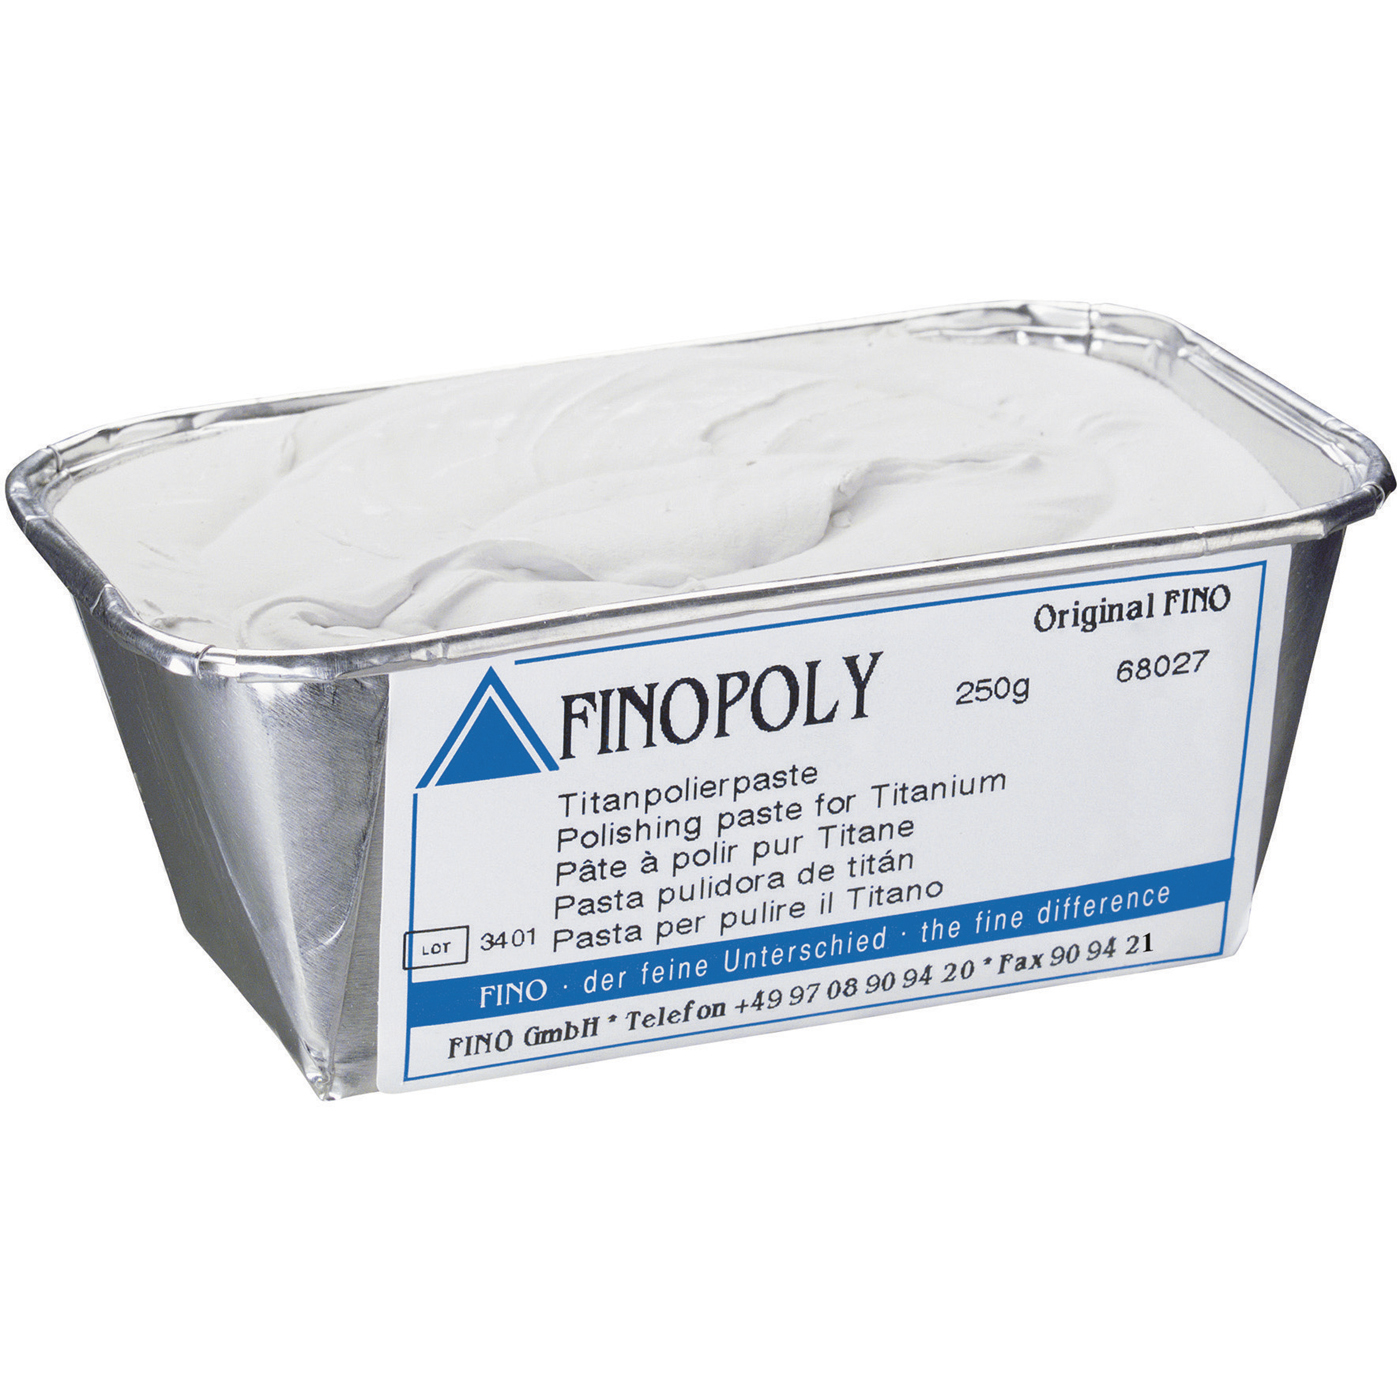 FINOPOLY Titanpolierpaste, weiß - 250 g